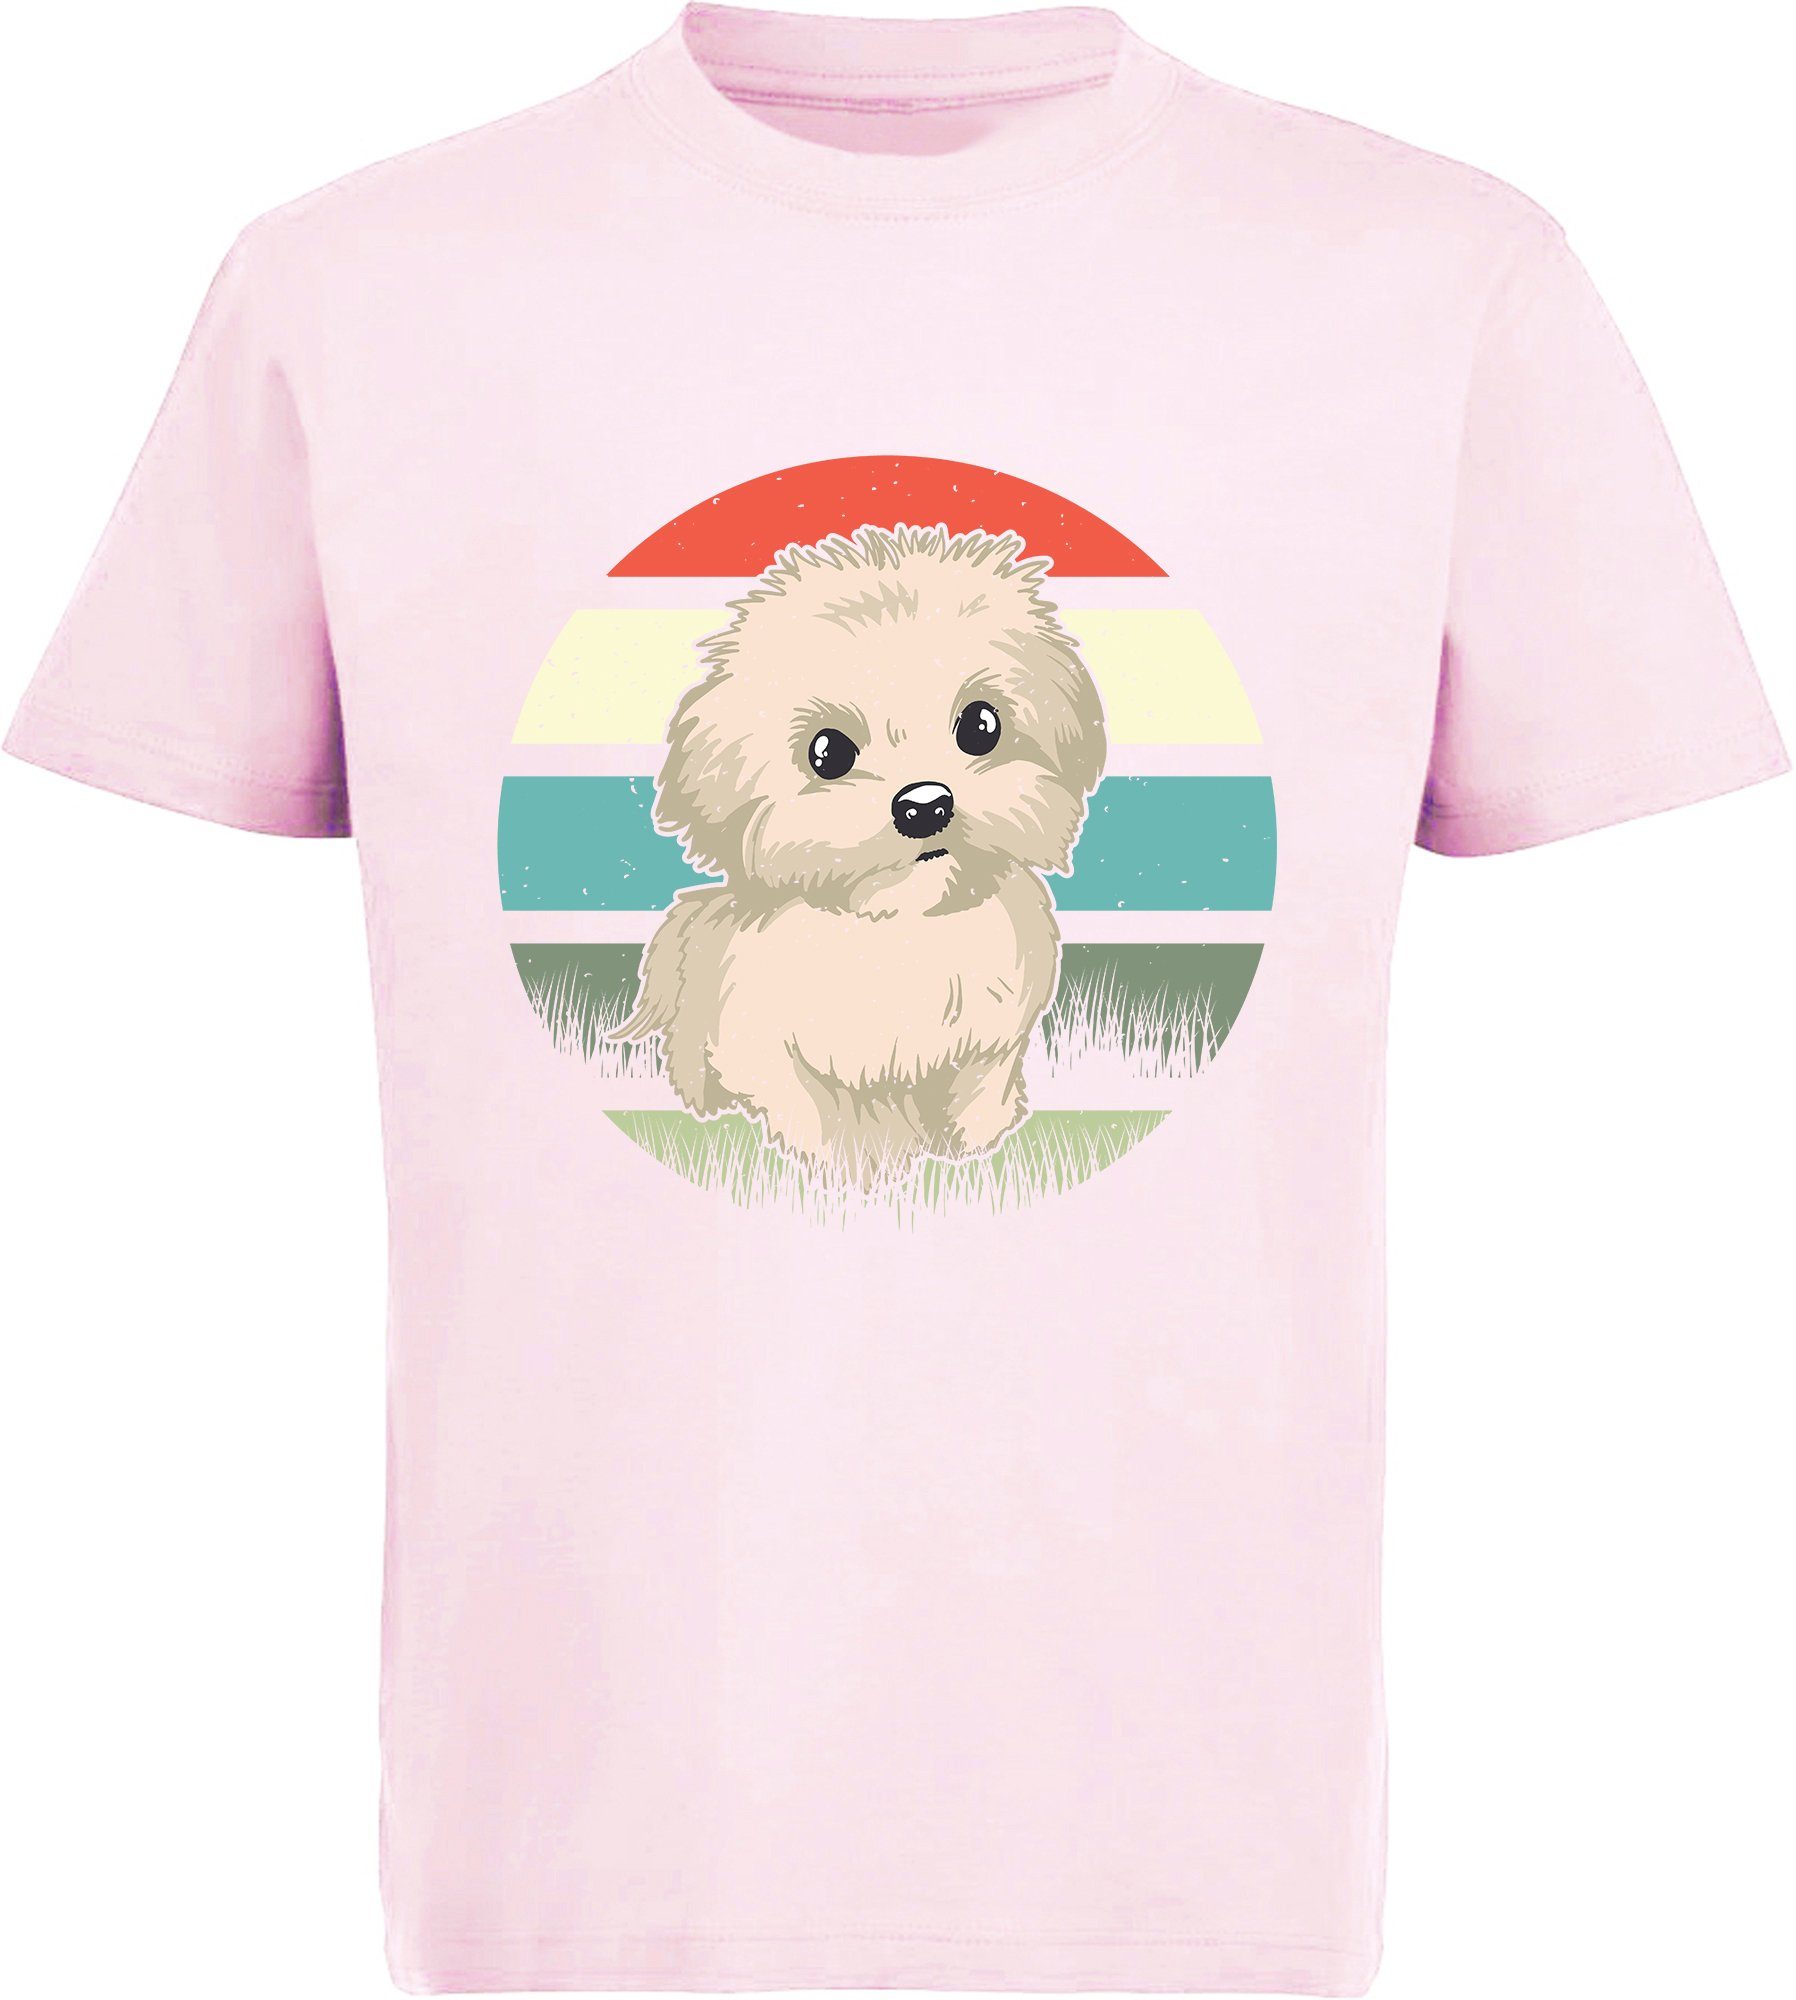 MyDesign24 Print-Shirt Kinder Hunde T-Shirt bedruckt - Retro Malteser Welpen Baumwollshirt mit Aufdruck, i242 rosa